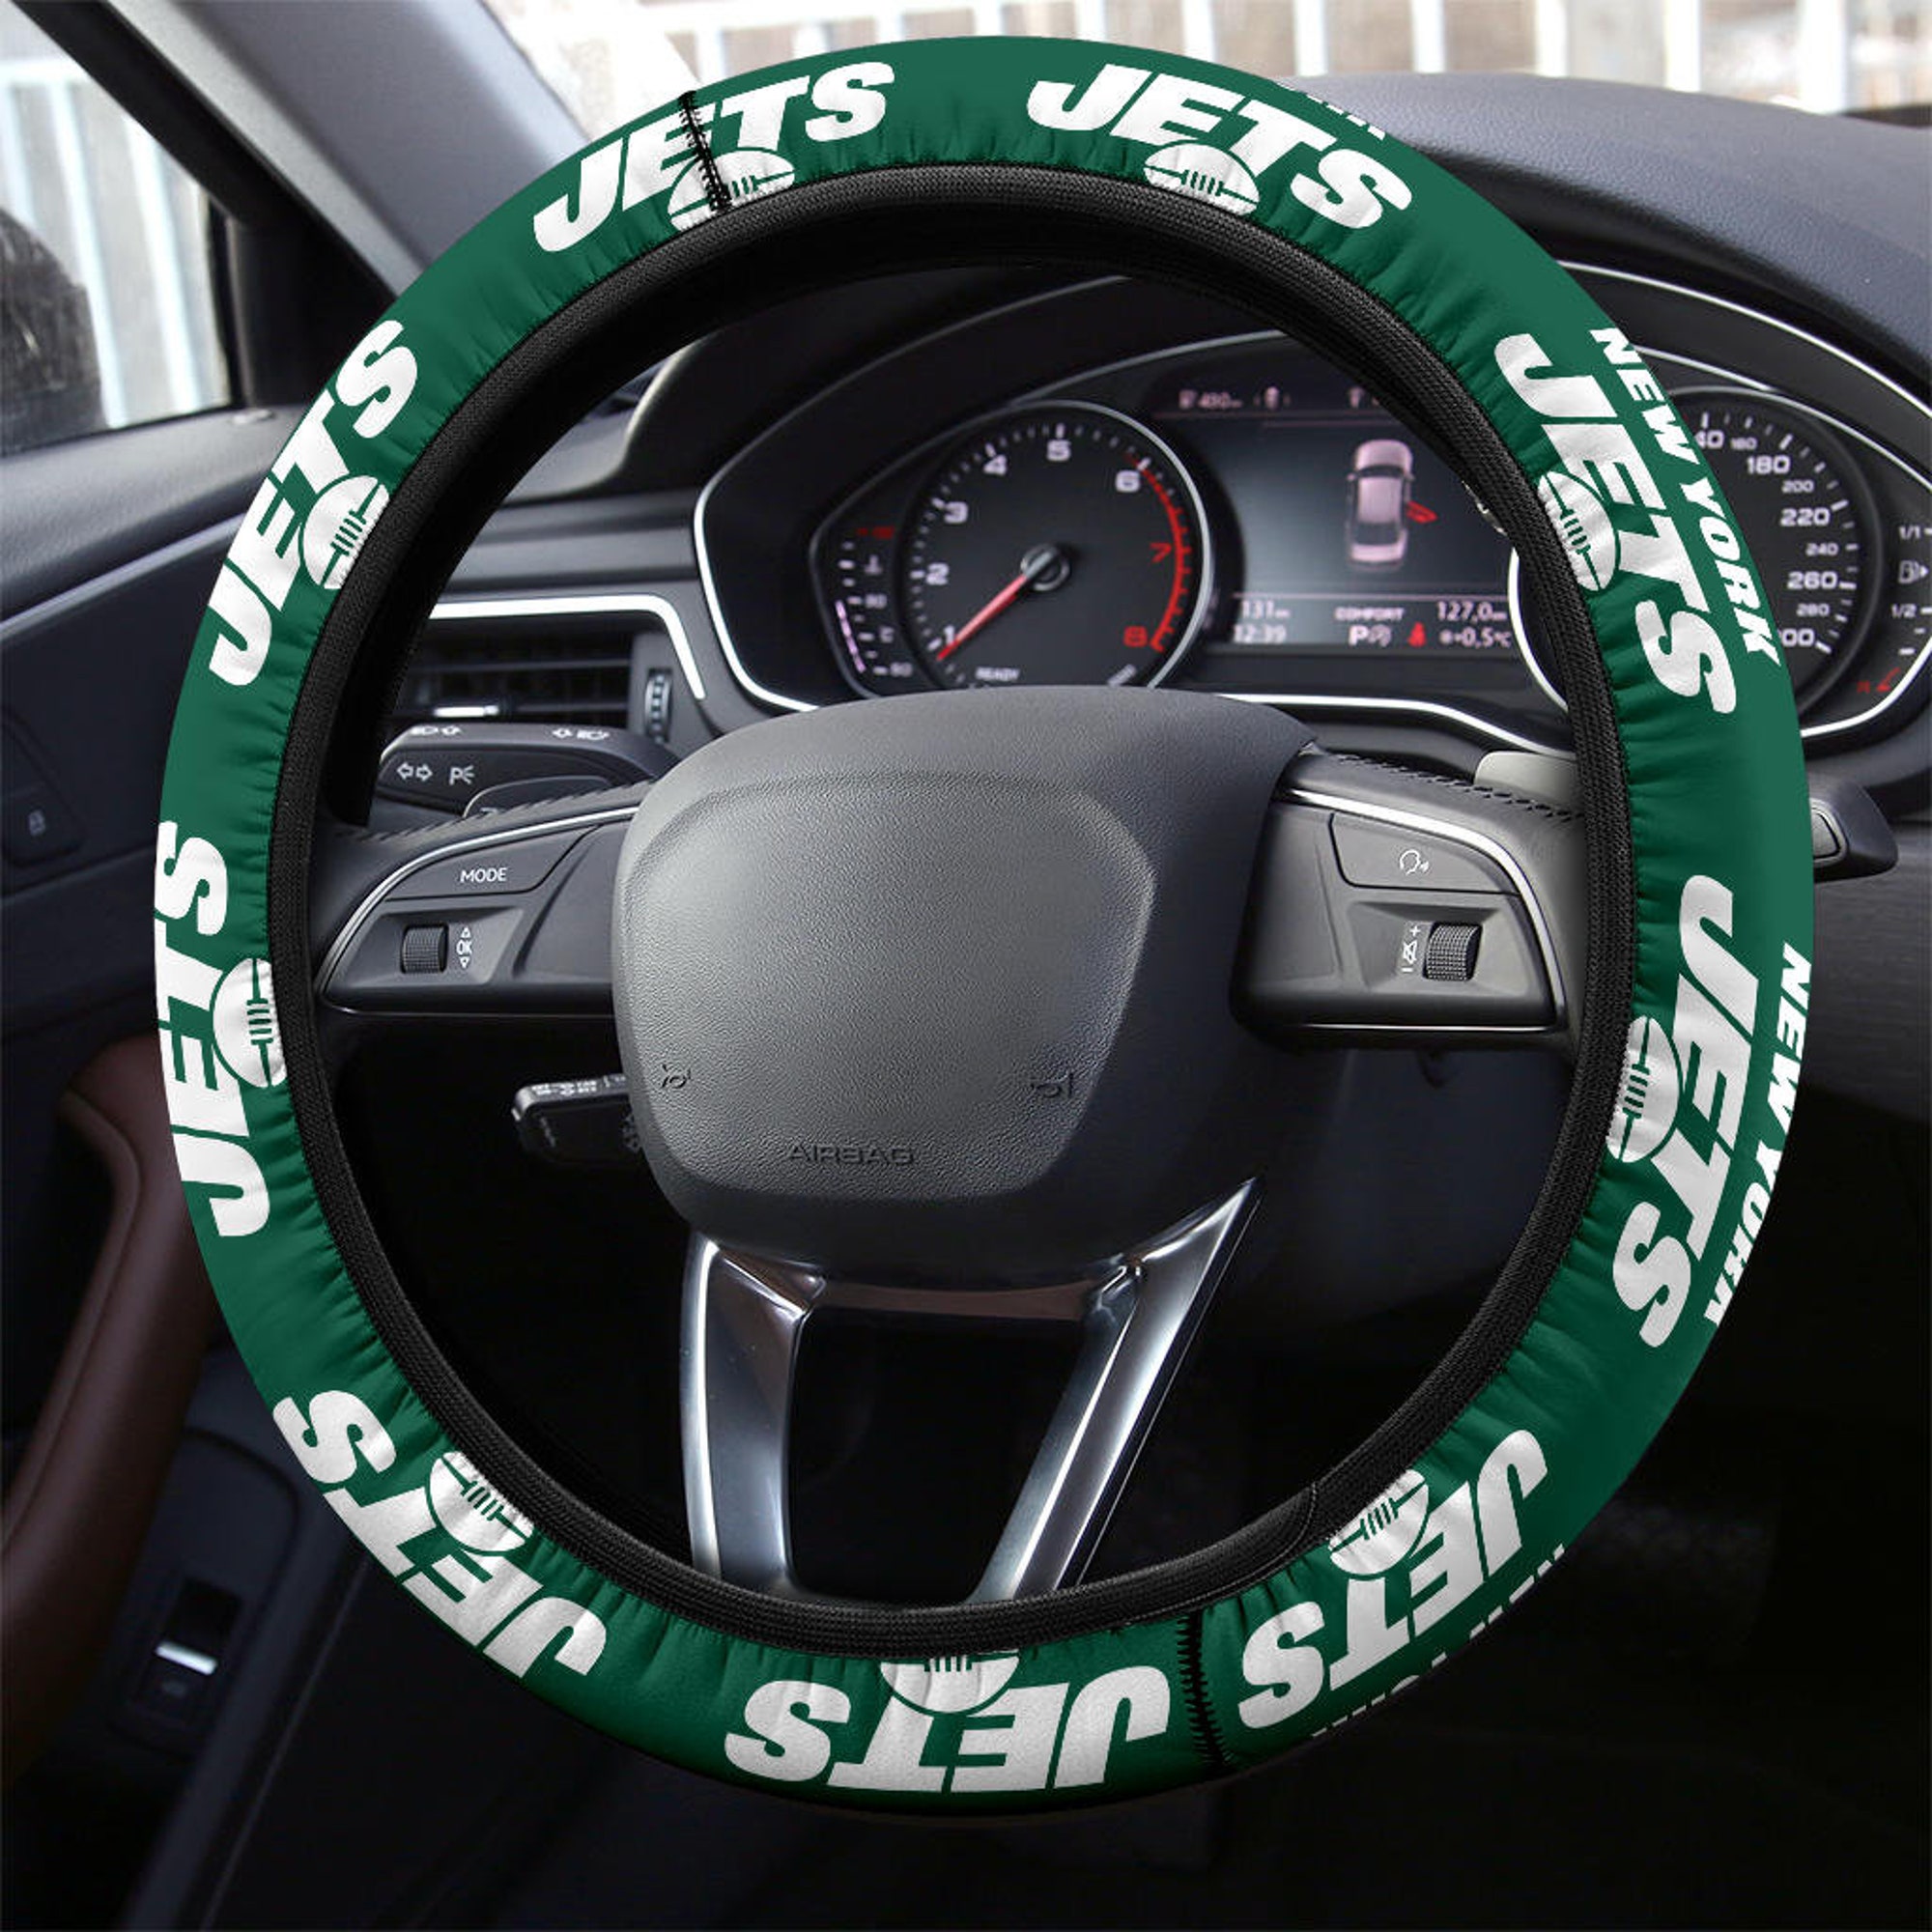 New York Jets themed custom steering wheel cover for a fan